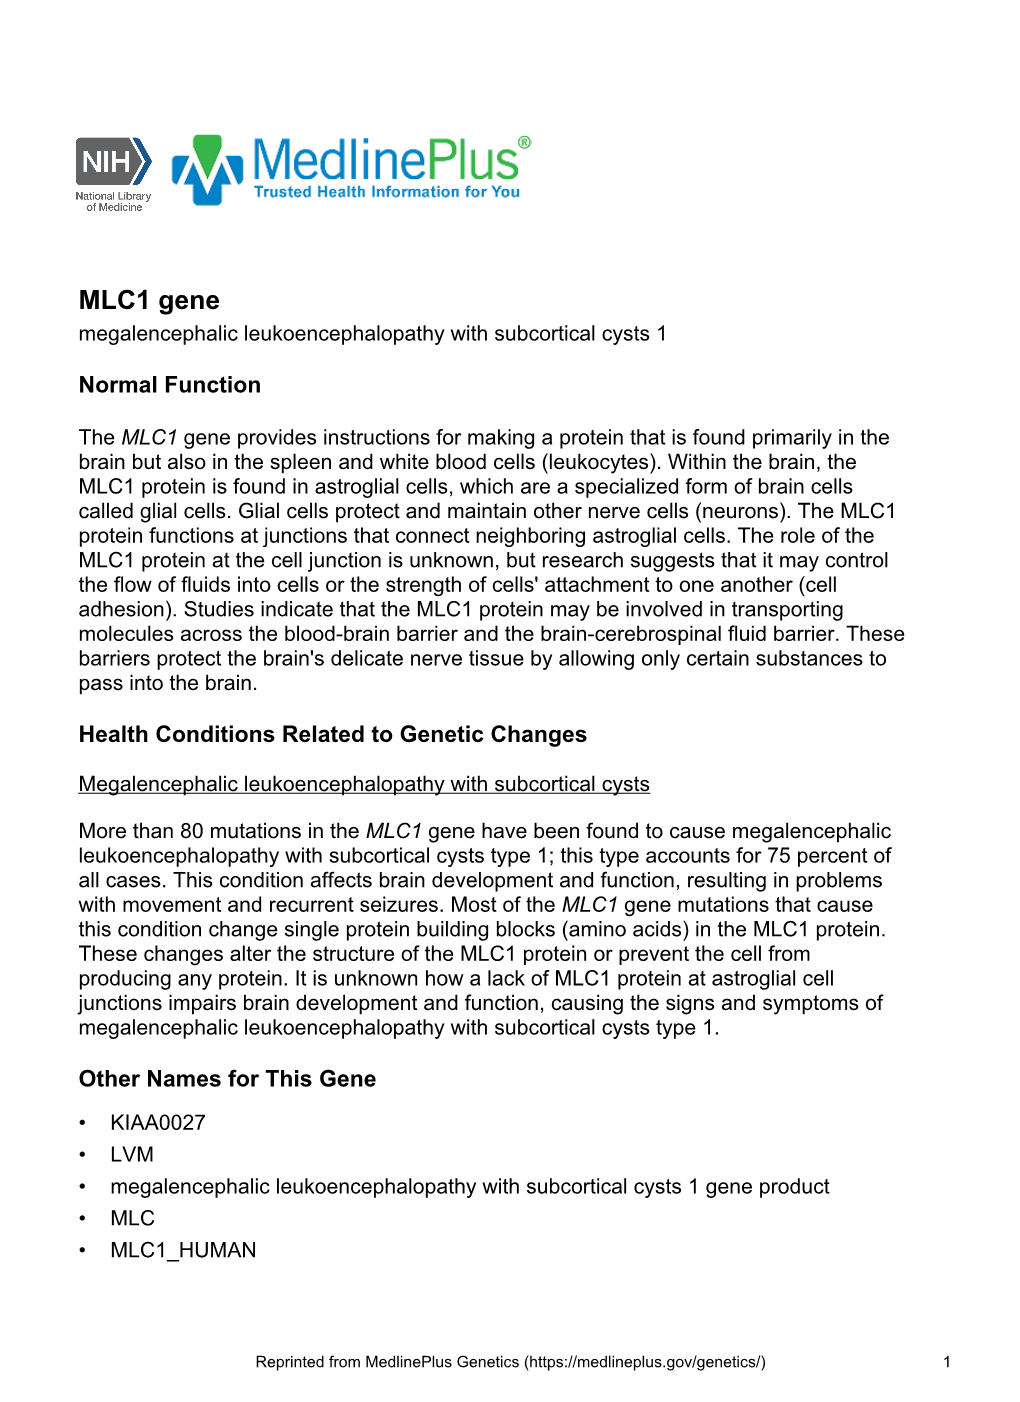 MLC1 Gene Megalencephalic Leukoencephalopathy with Subcortical Cysts 1